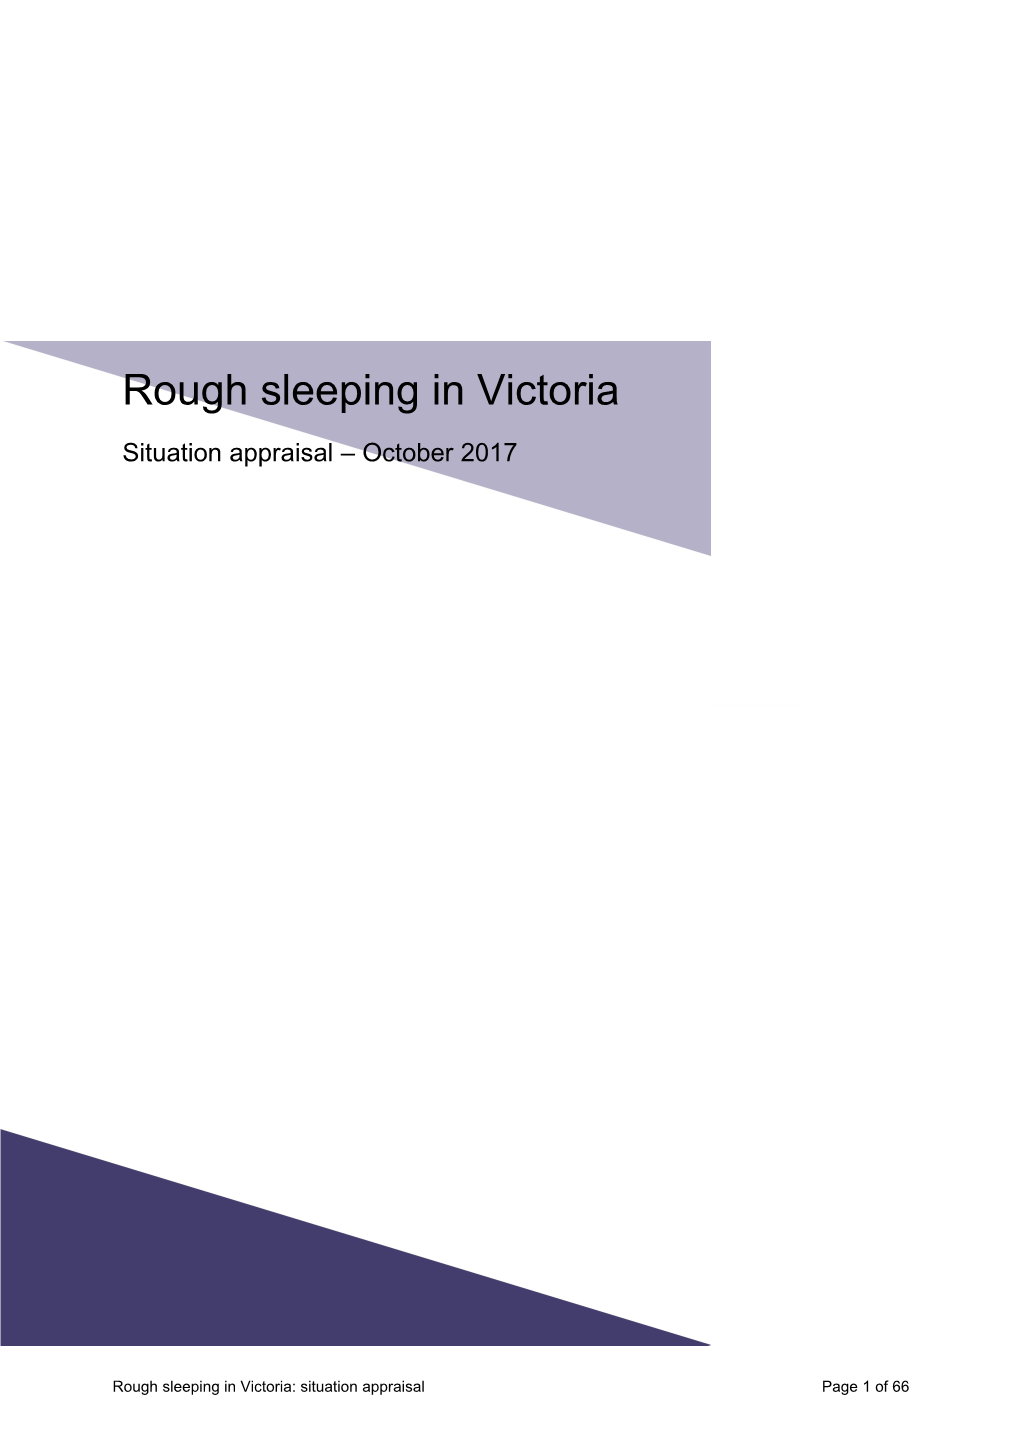 Rough Sleeping in Victoria